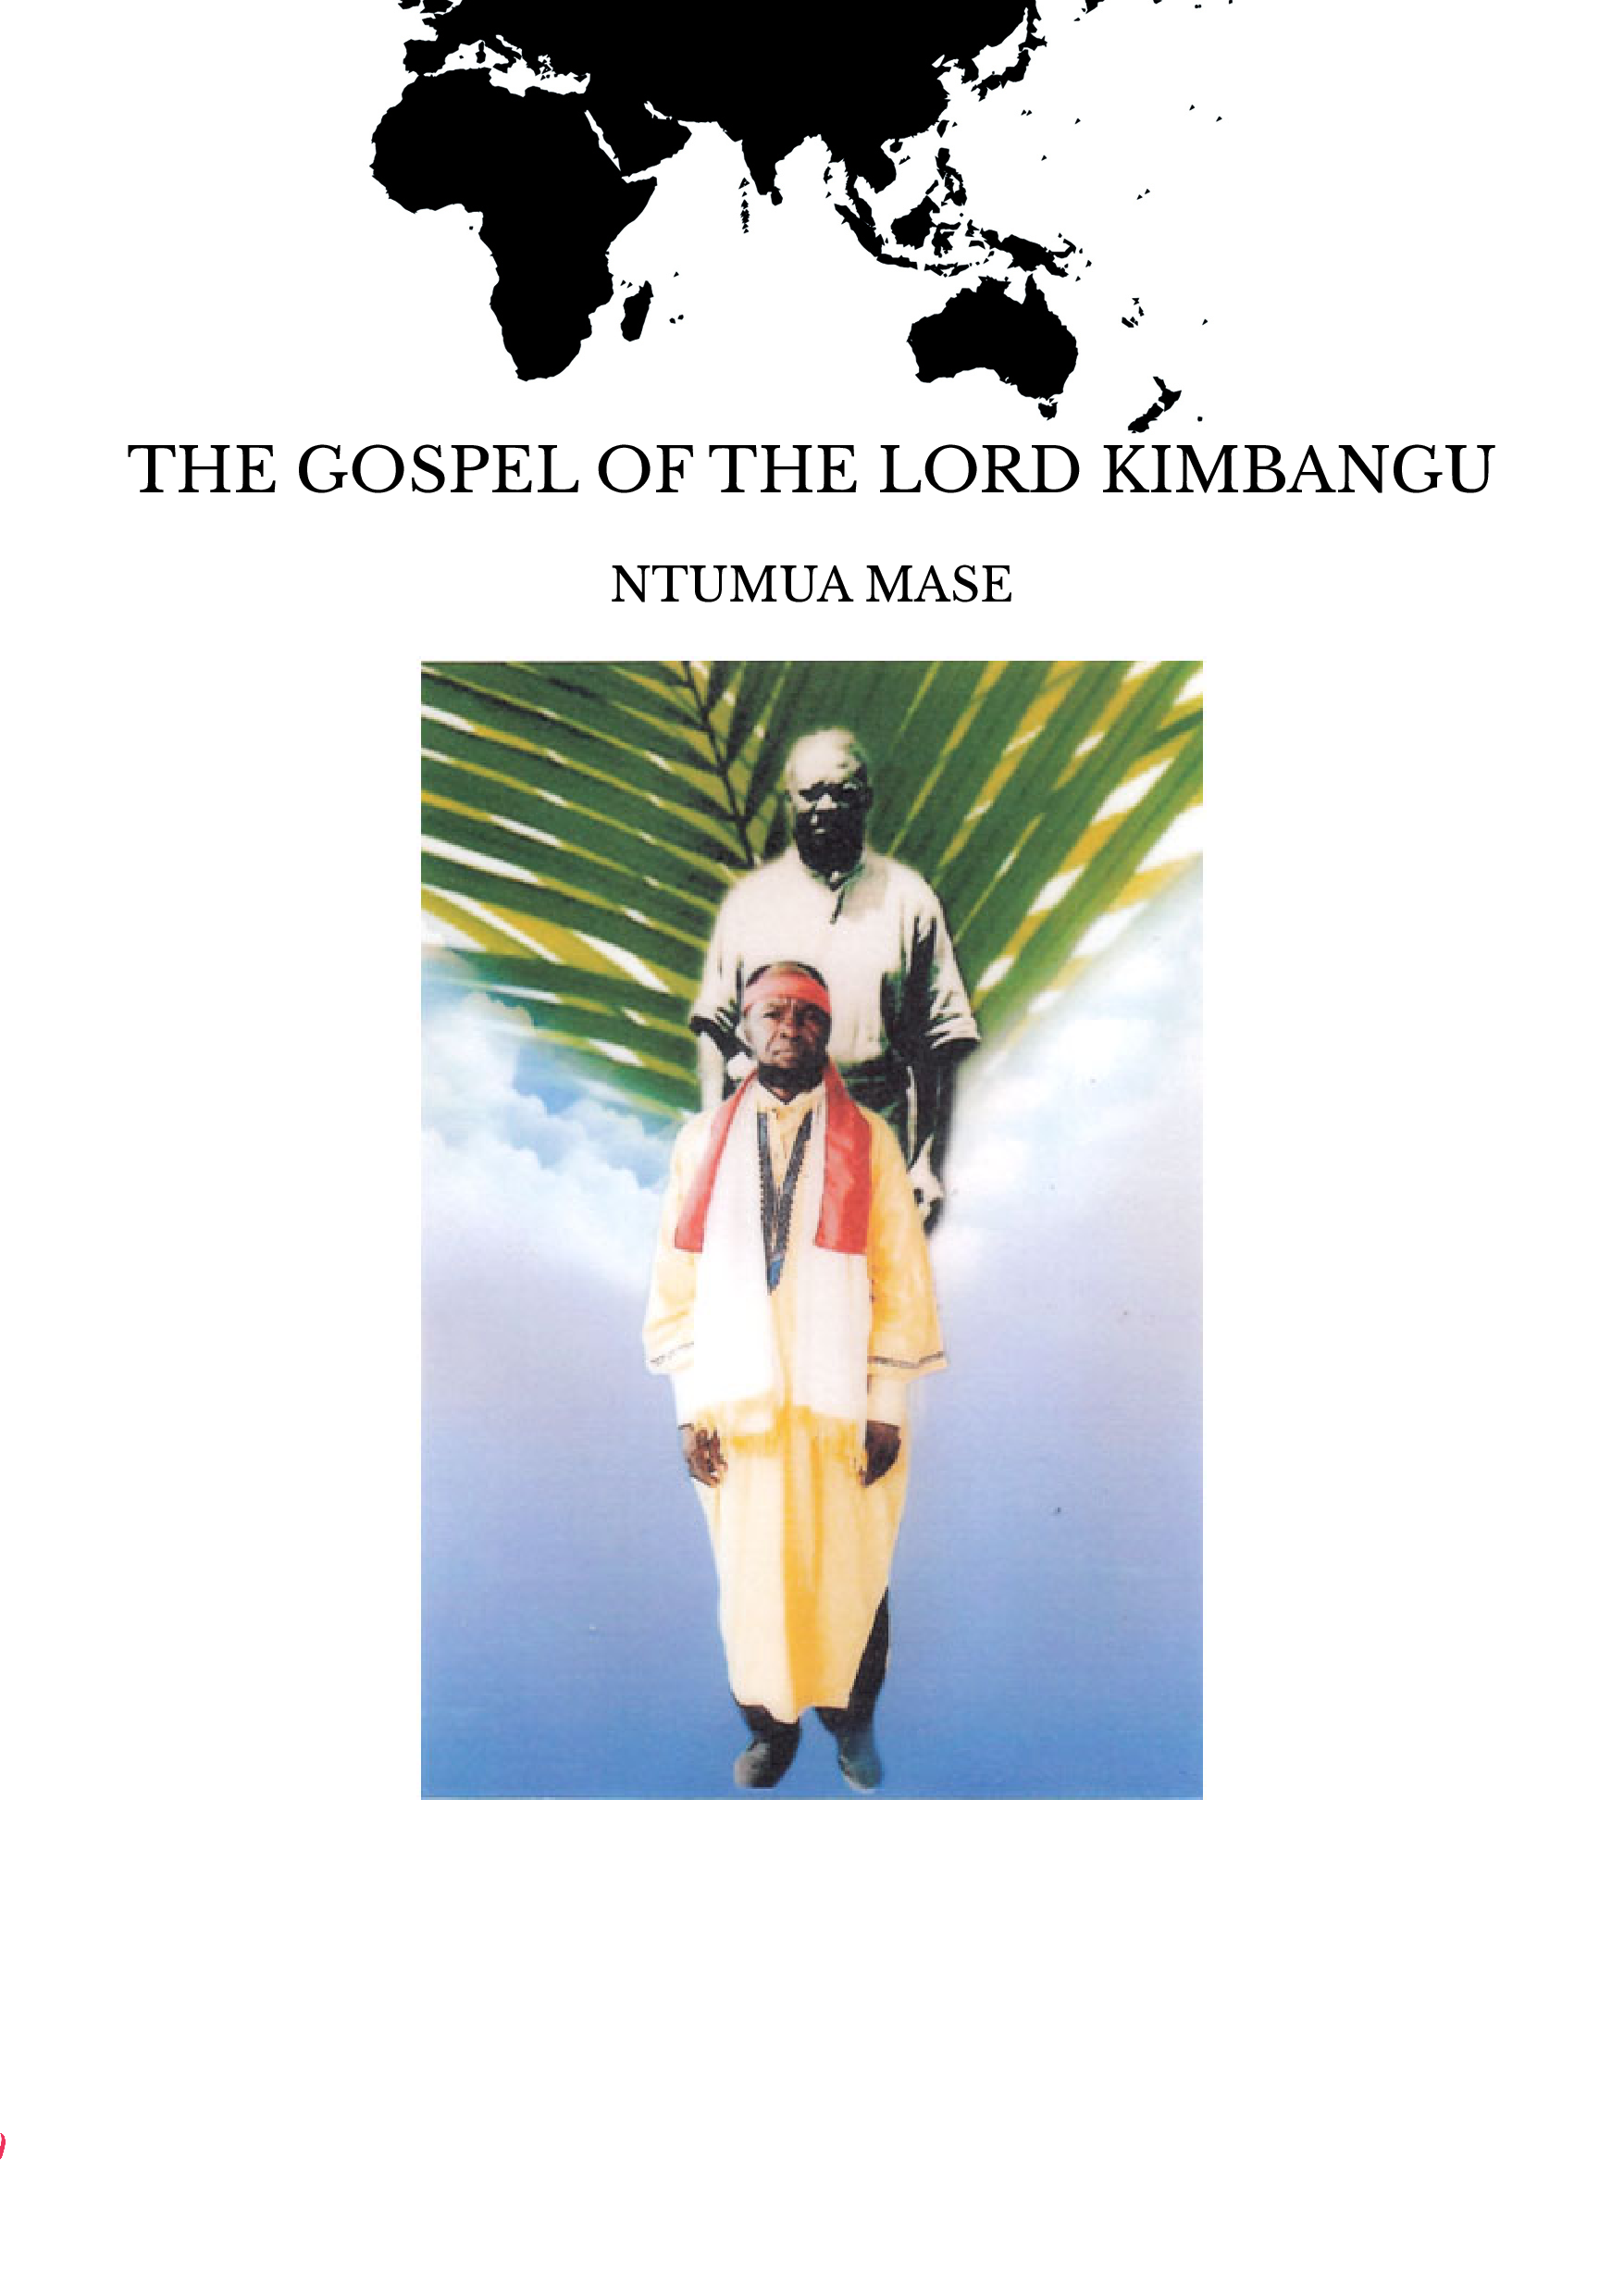 THE GOSPEL OF THE LORD KIMBANGU